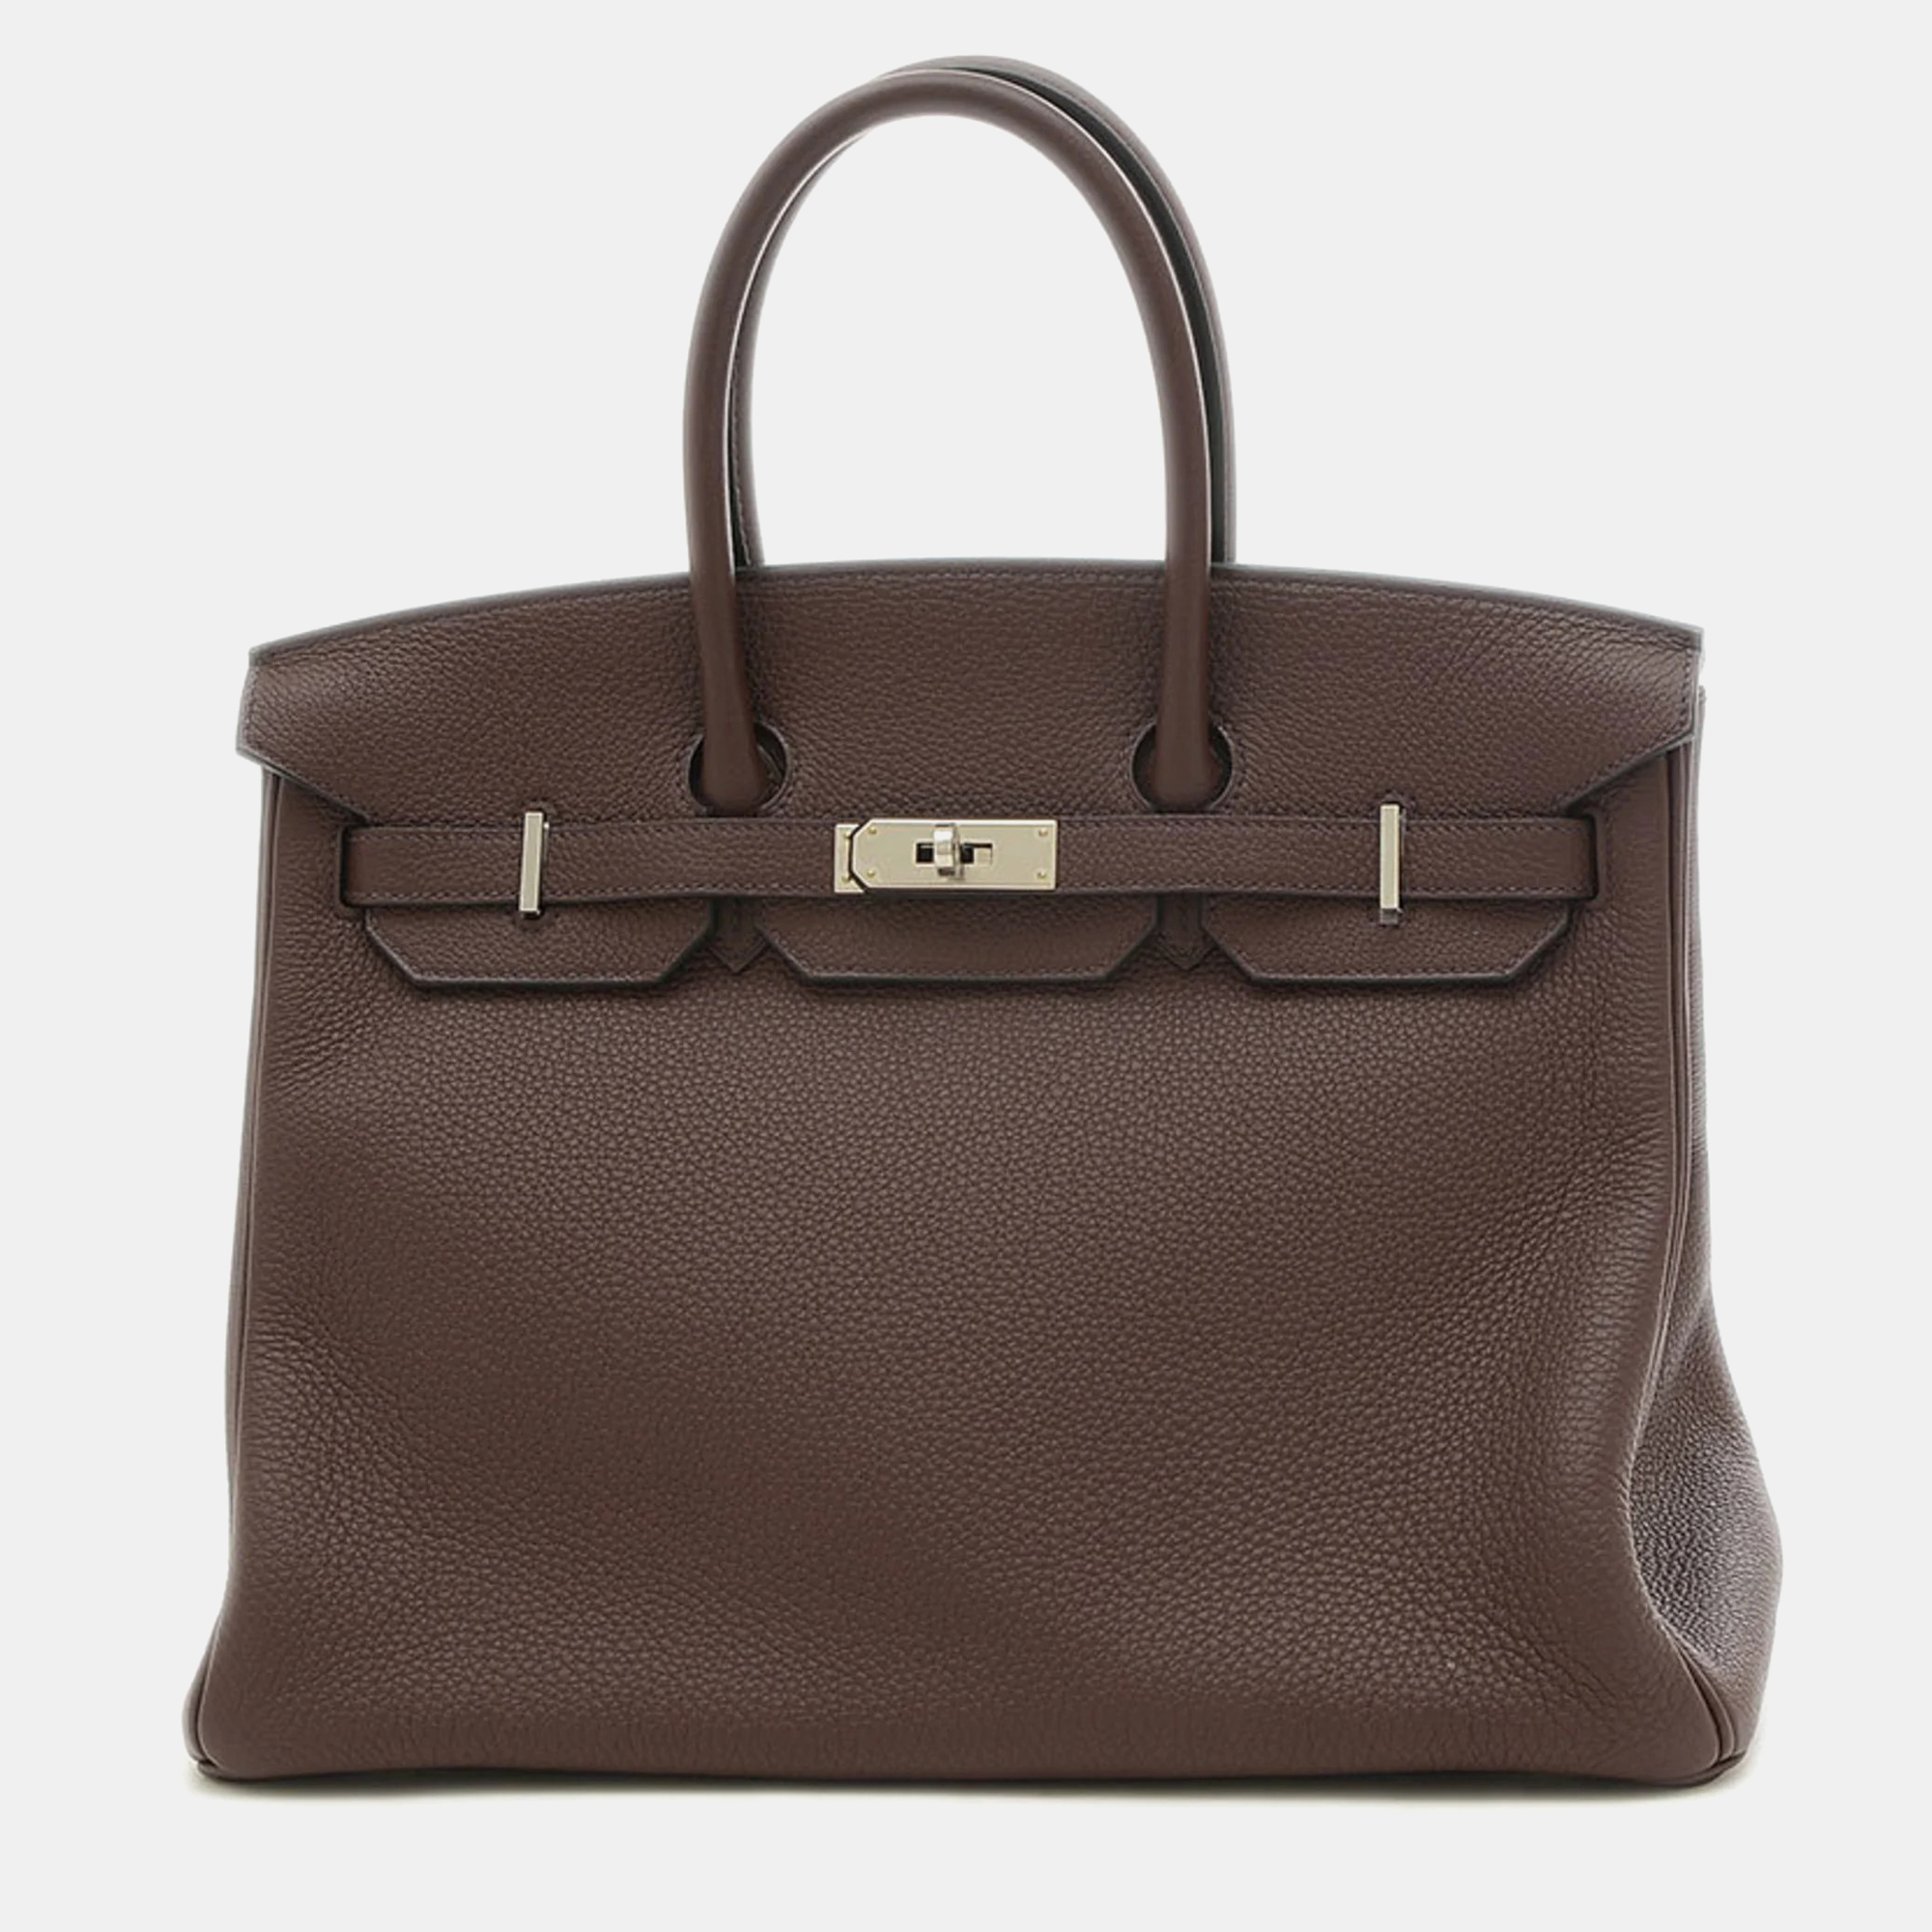 Hermes rouge serie togo birkin 35 handbag